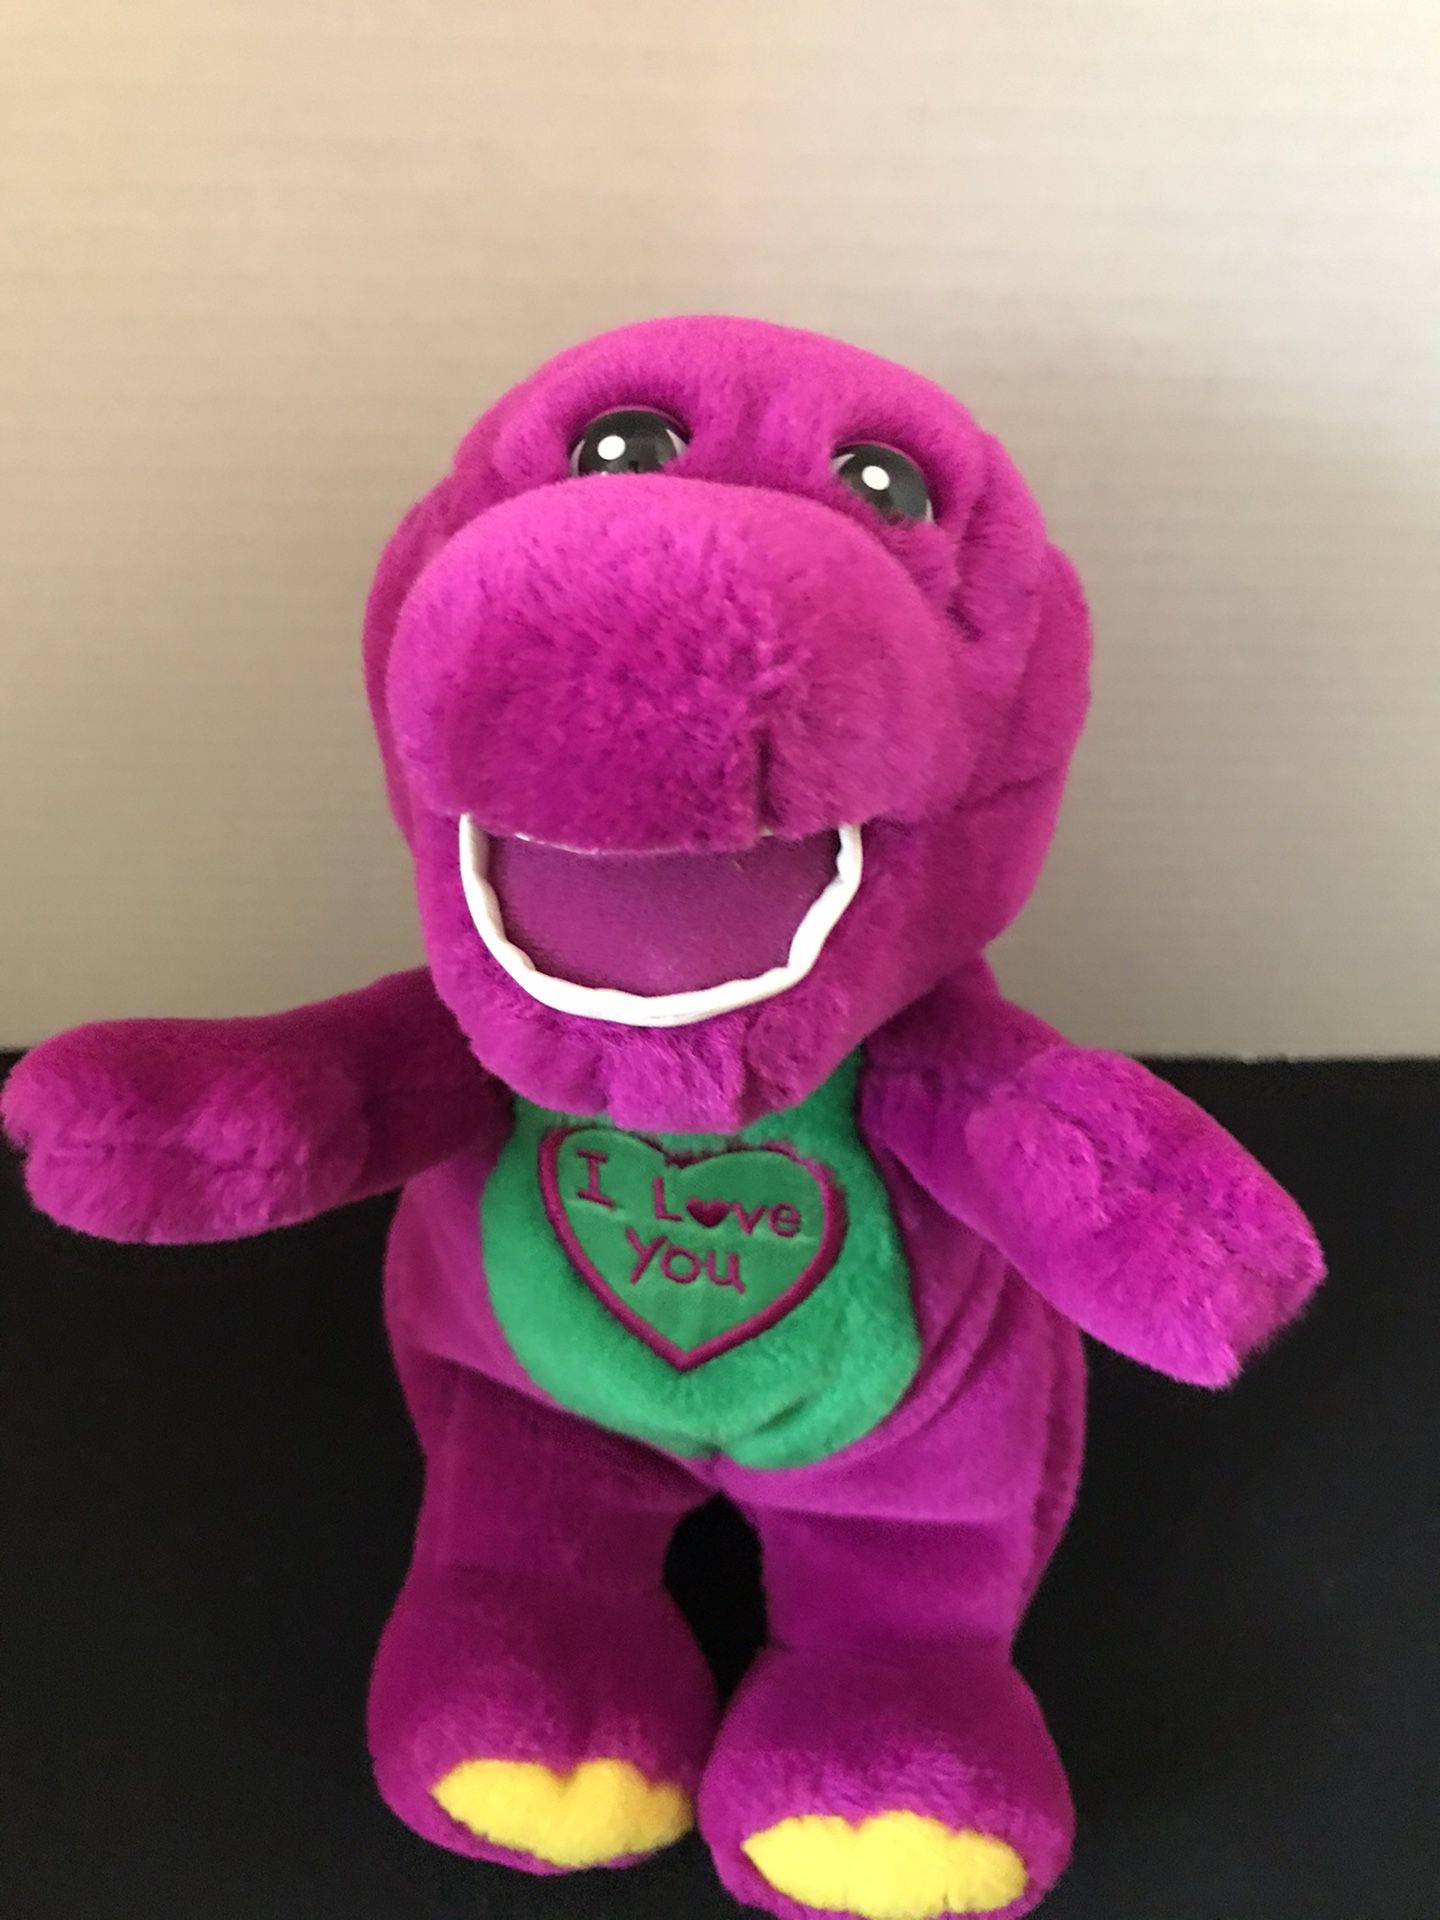 Barney the Dinosaur stuffed plush